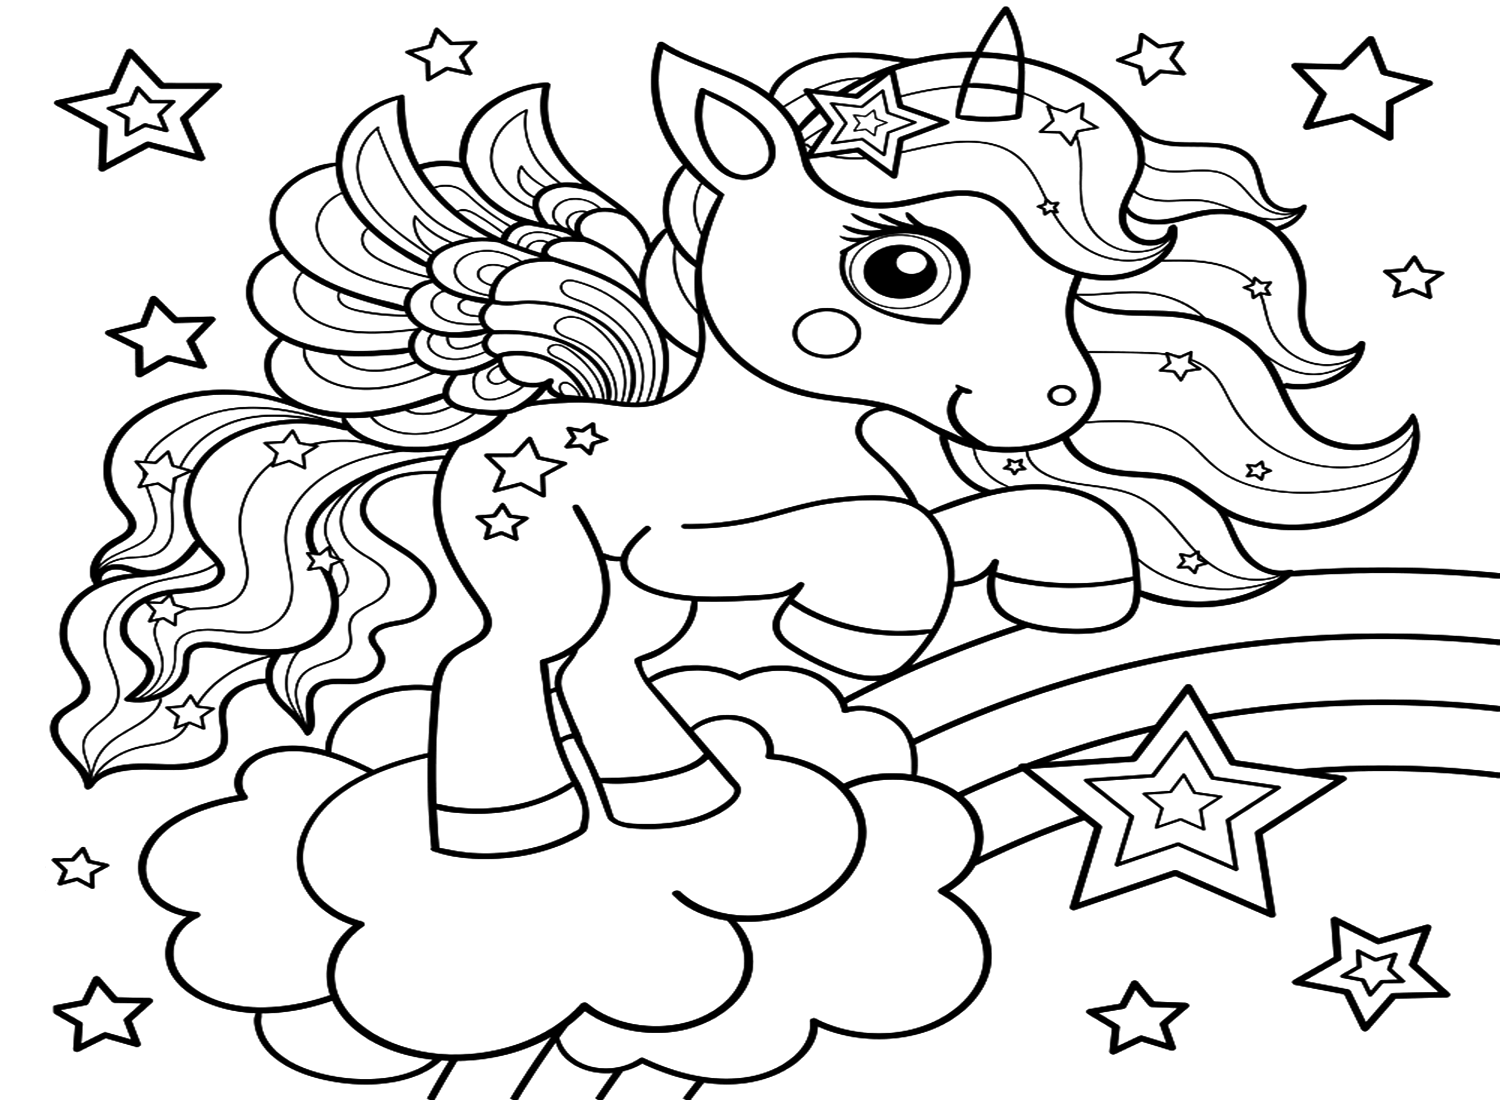 Unicorn Coloring Sheet from Unicorn